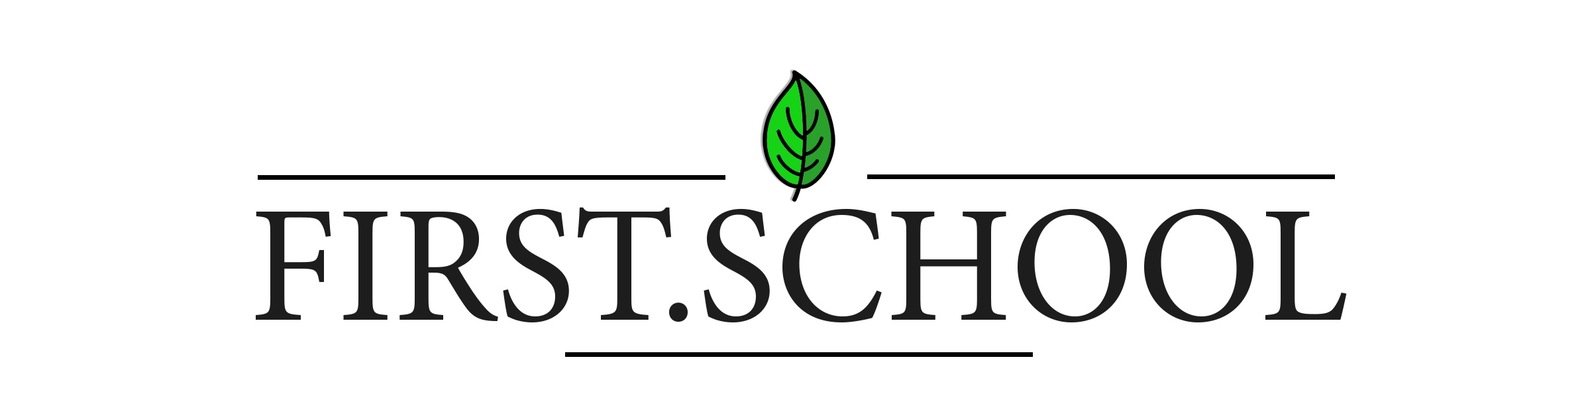 first.school logo